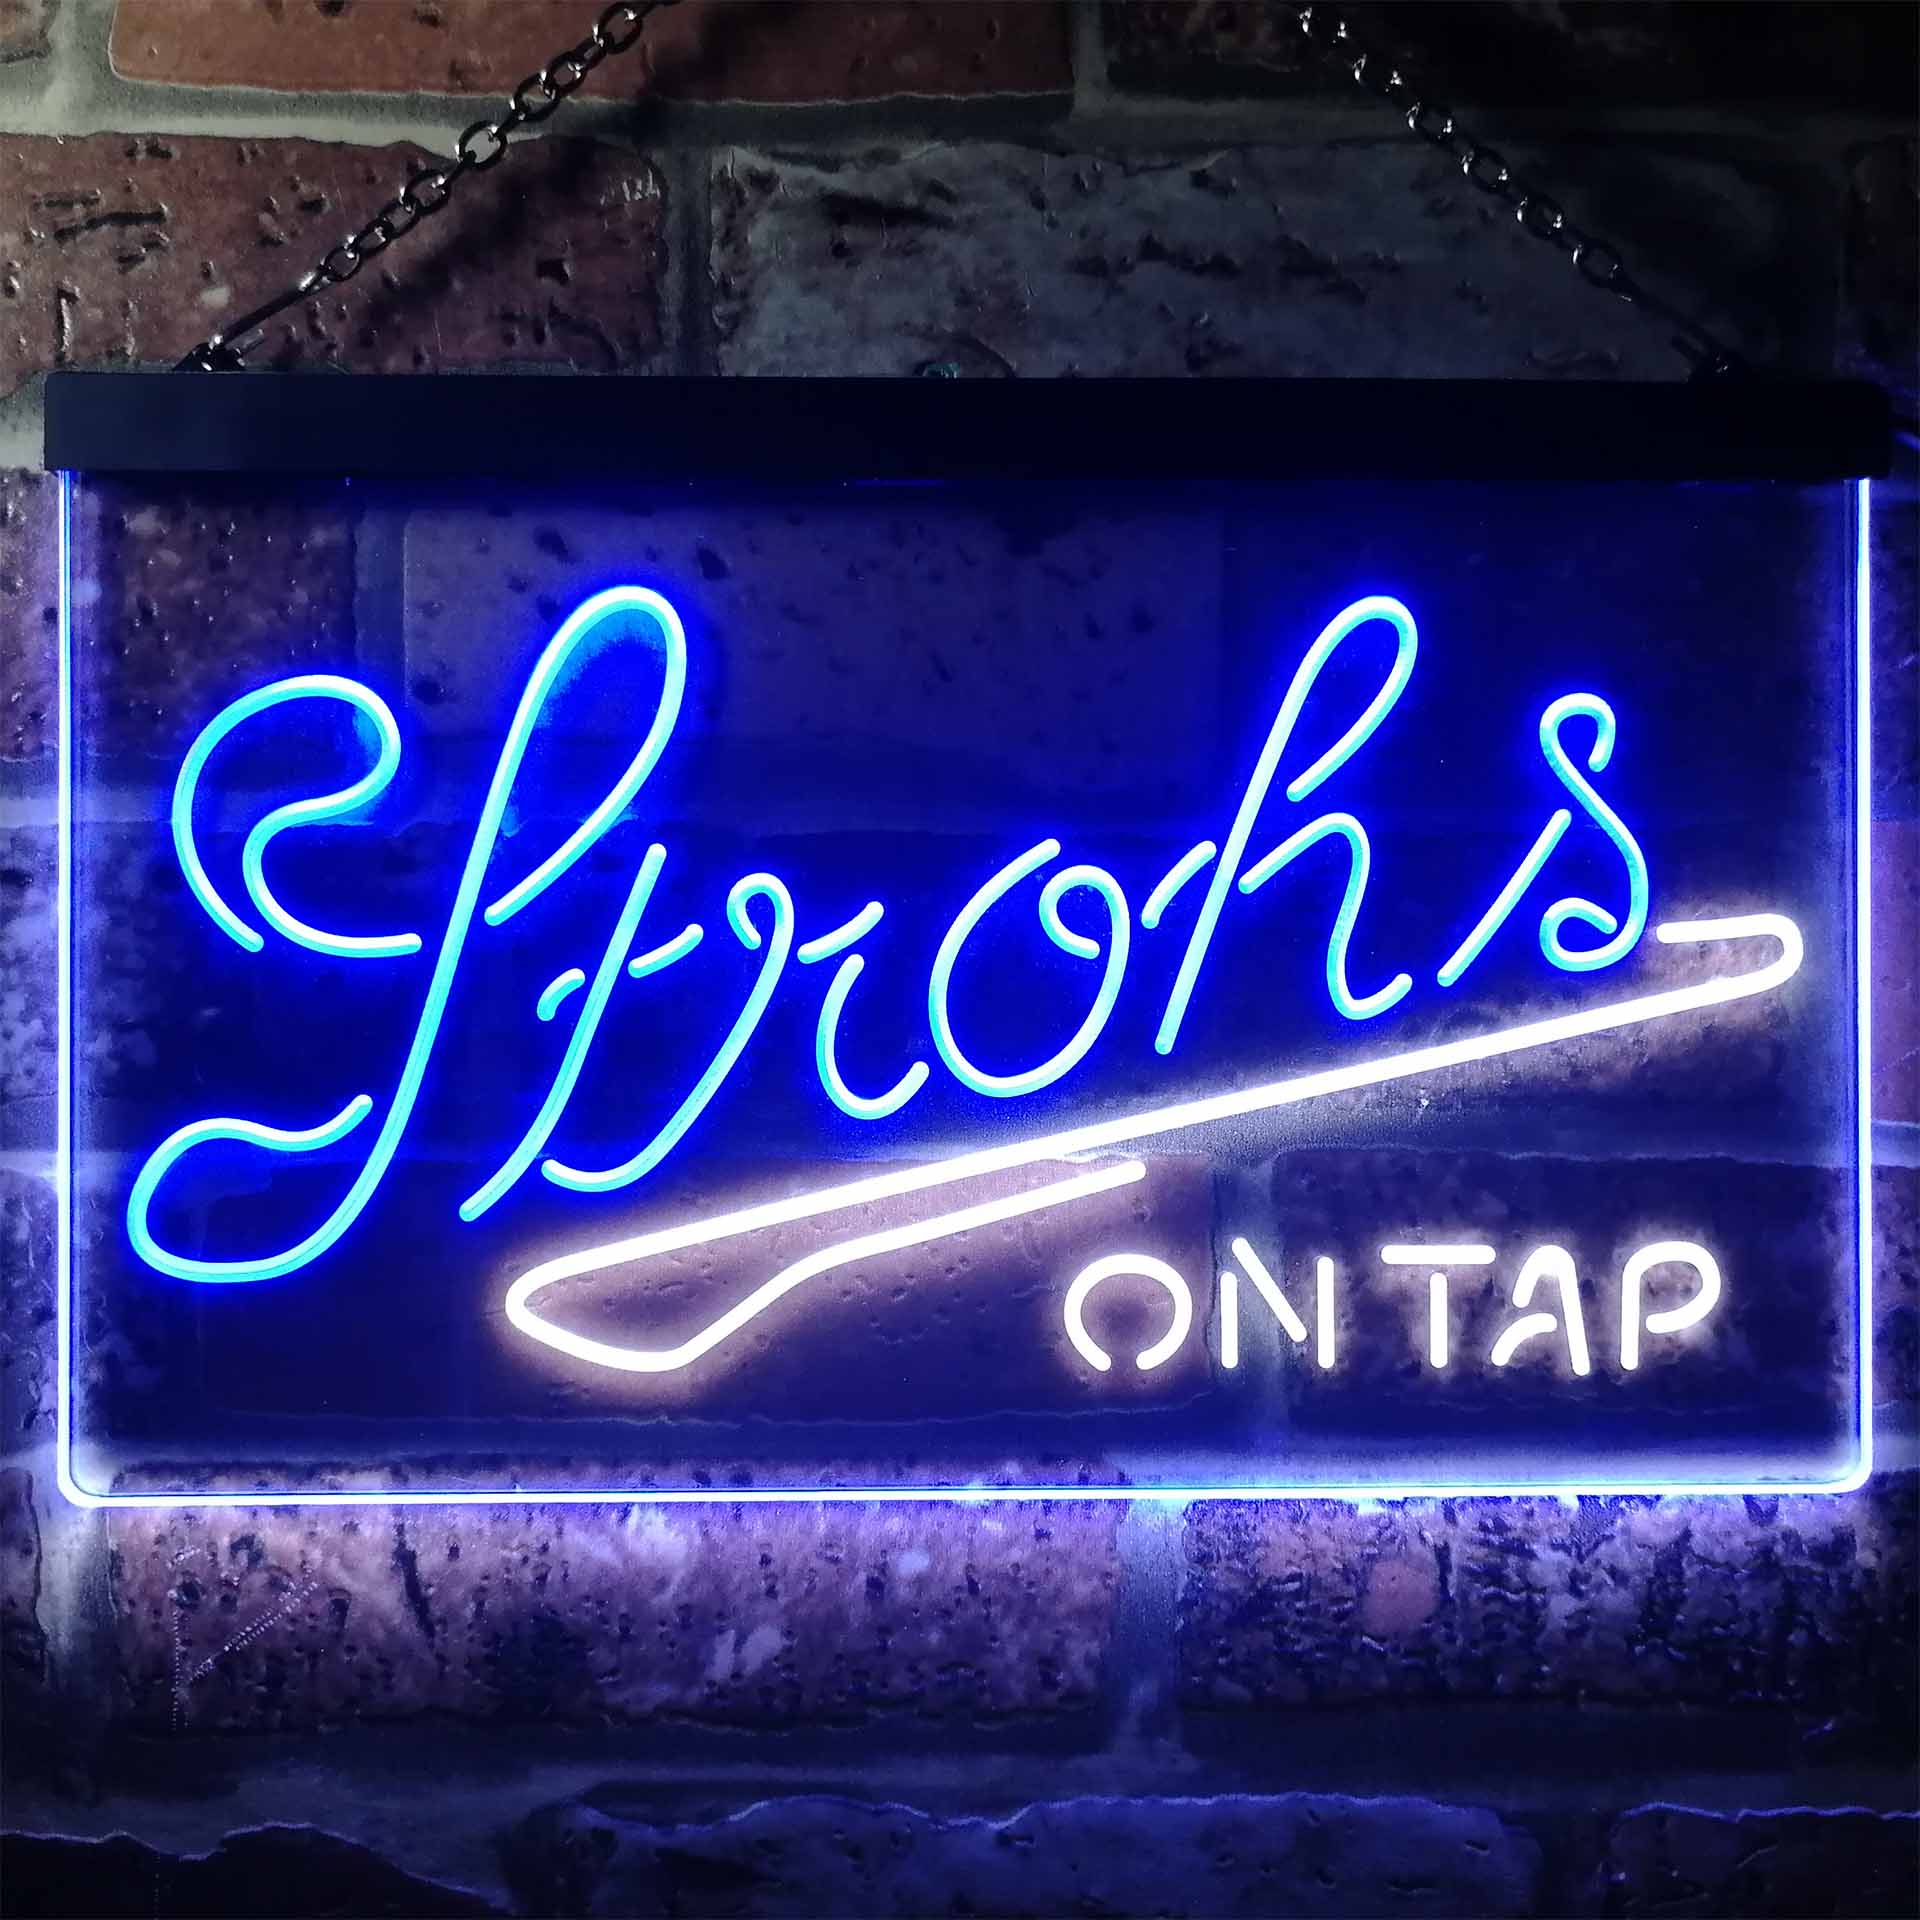 Strohs On Tap Beer Bar Neon LED Sign